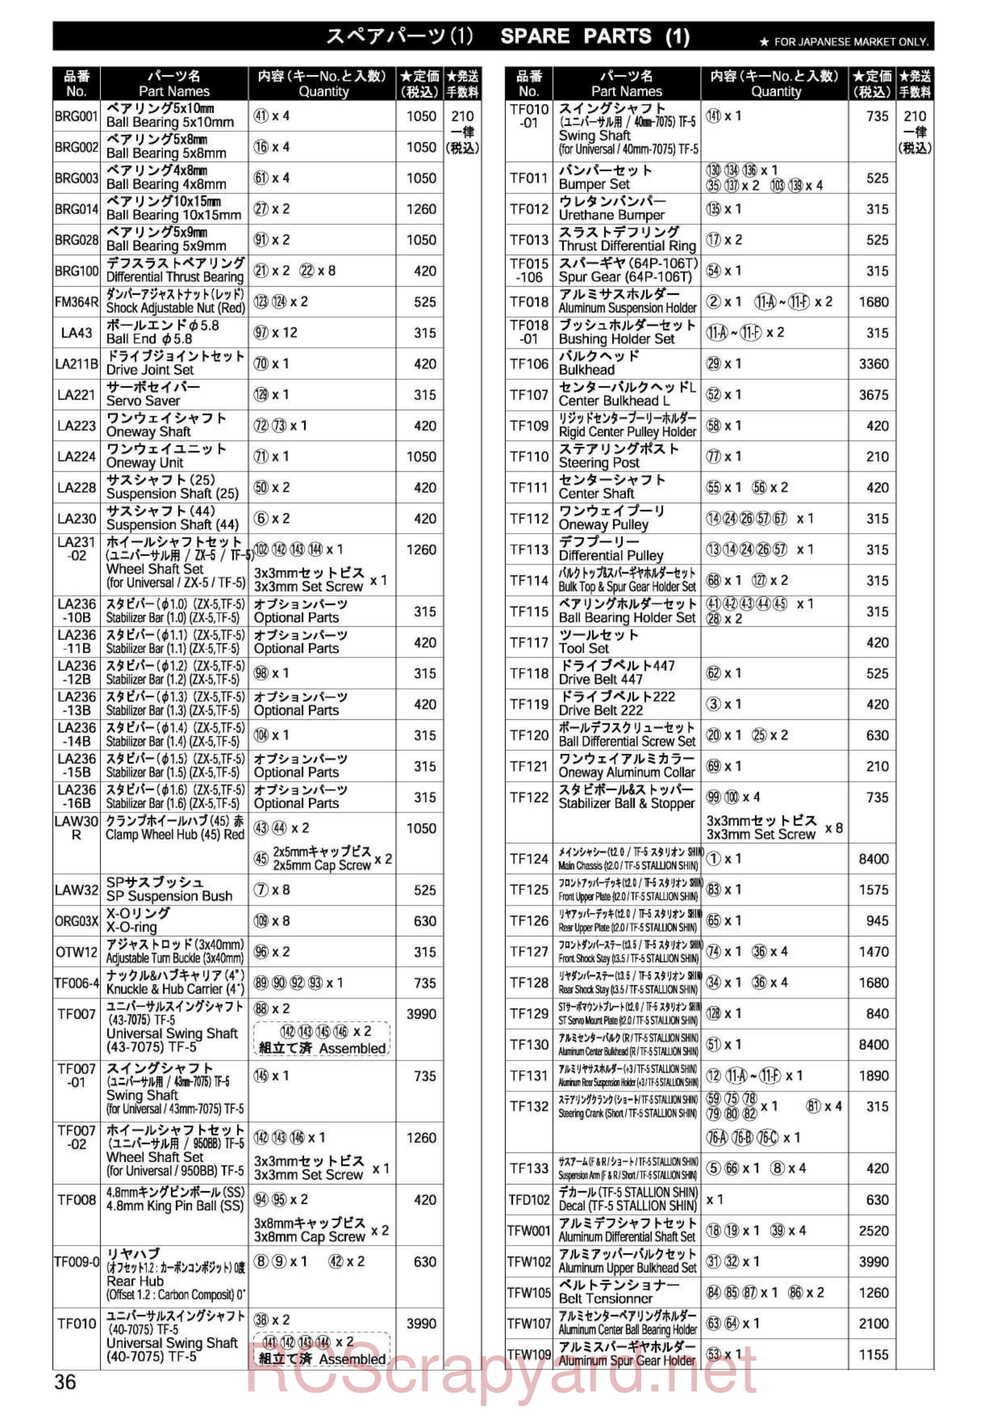 Kyosho - 30023 - Stalion-Shin - Manual - Page 35